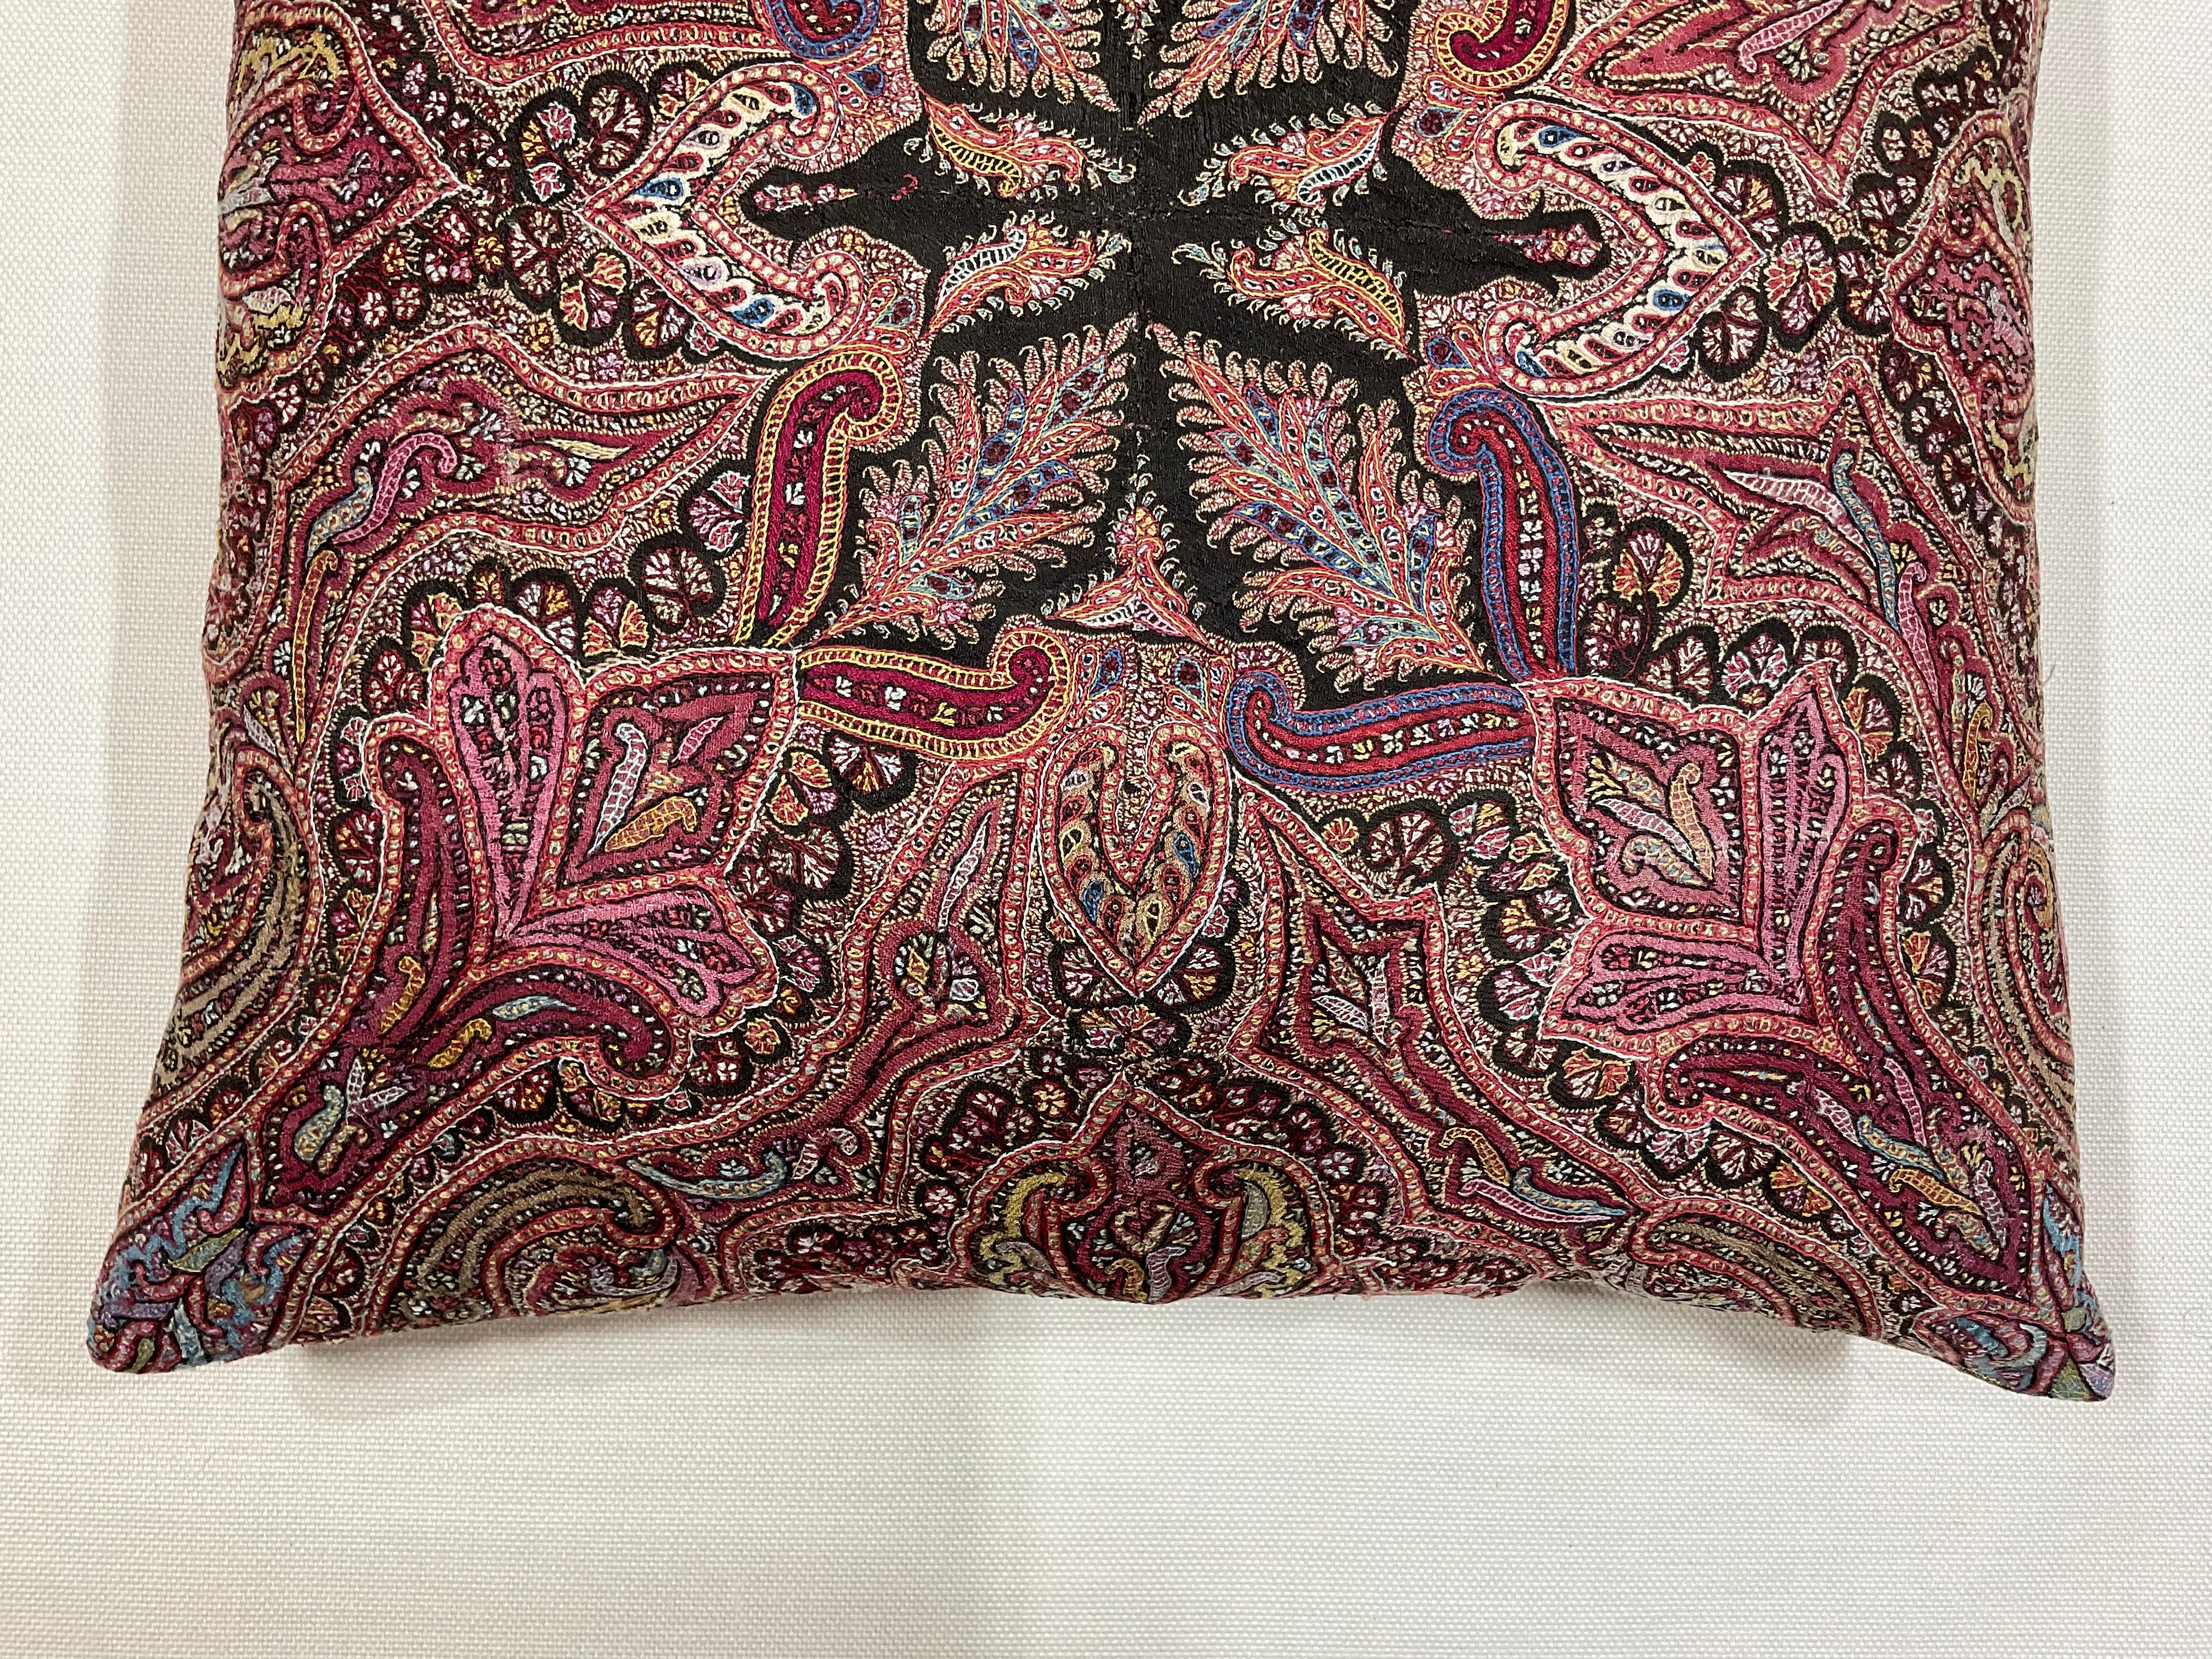 Single Hand Embroidery Persian Suzani Pillow 1